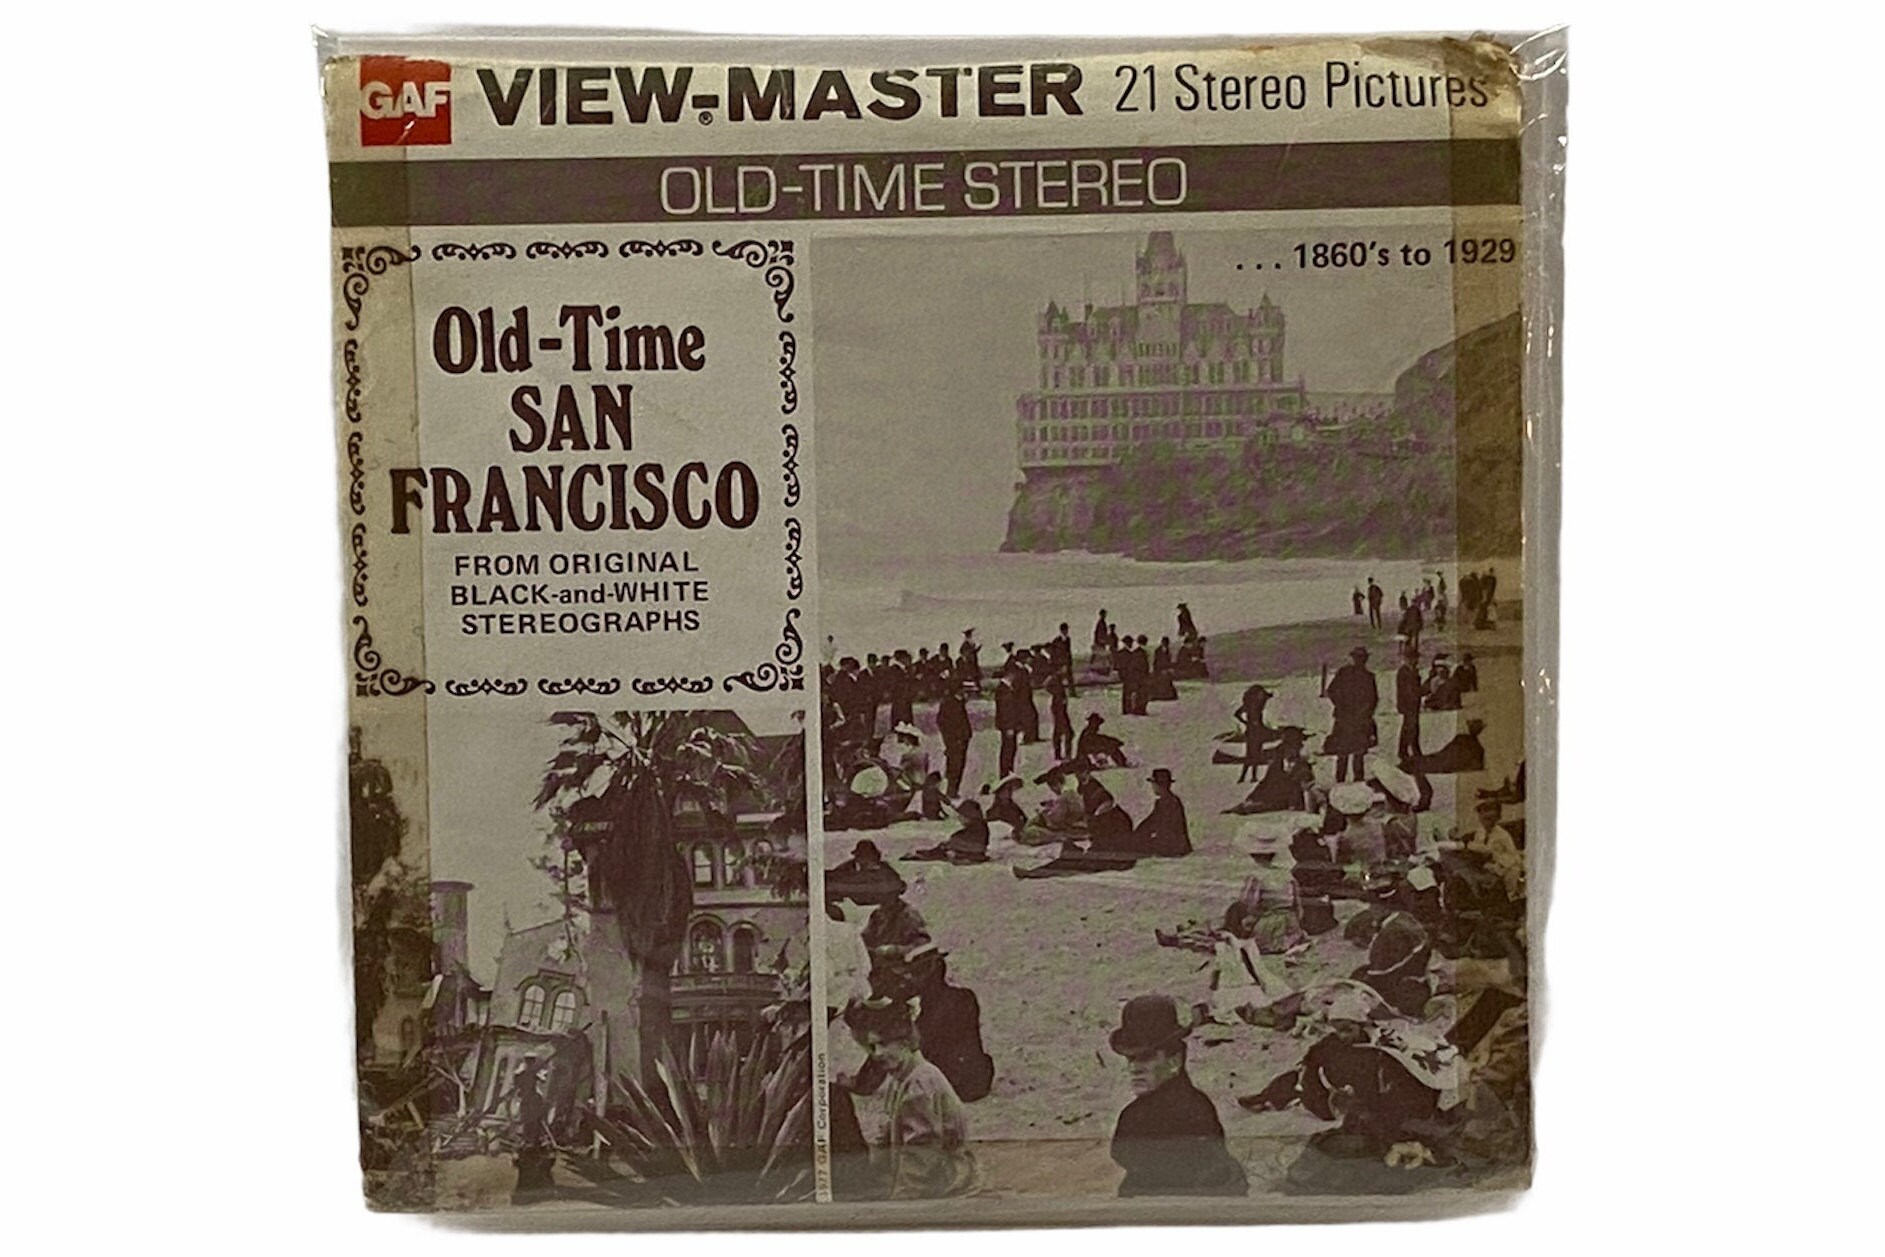 Old-Time SAN FRANCISCO View-Master Reel Set - Old-Time Stereo Series - GAF  - G4 Packet - H7 - 1977